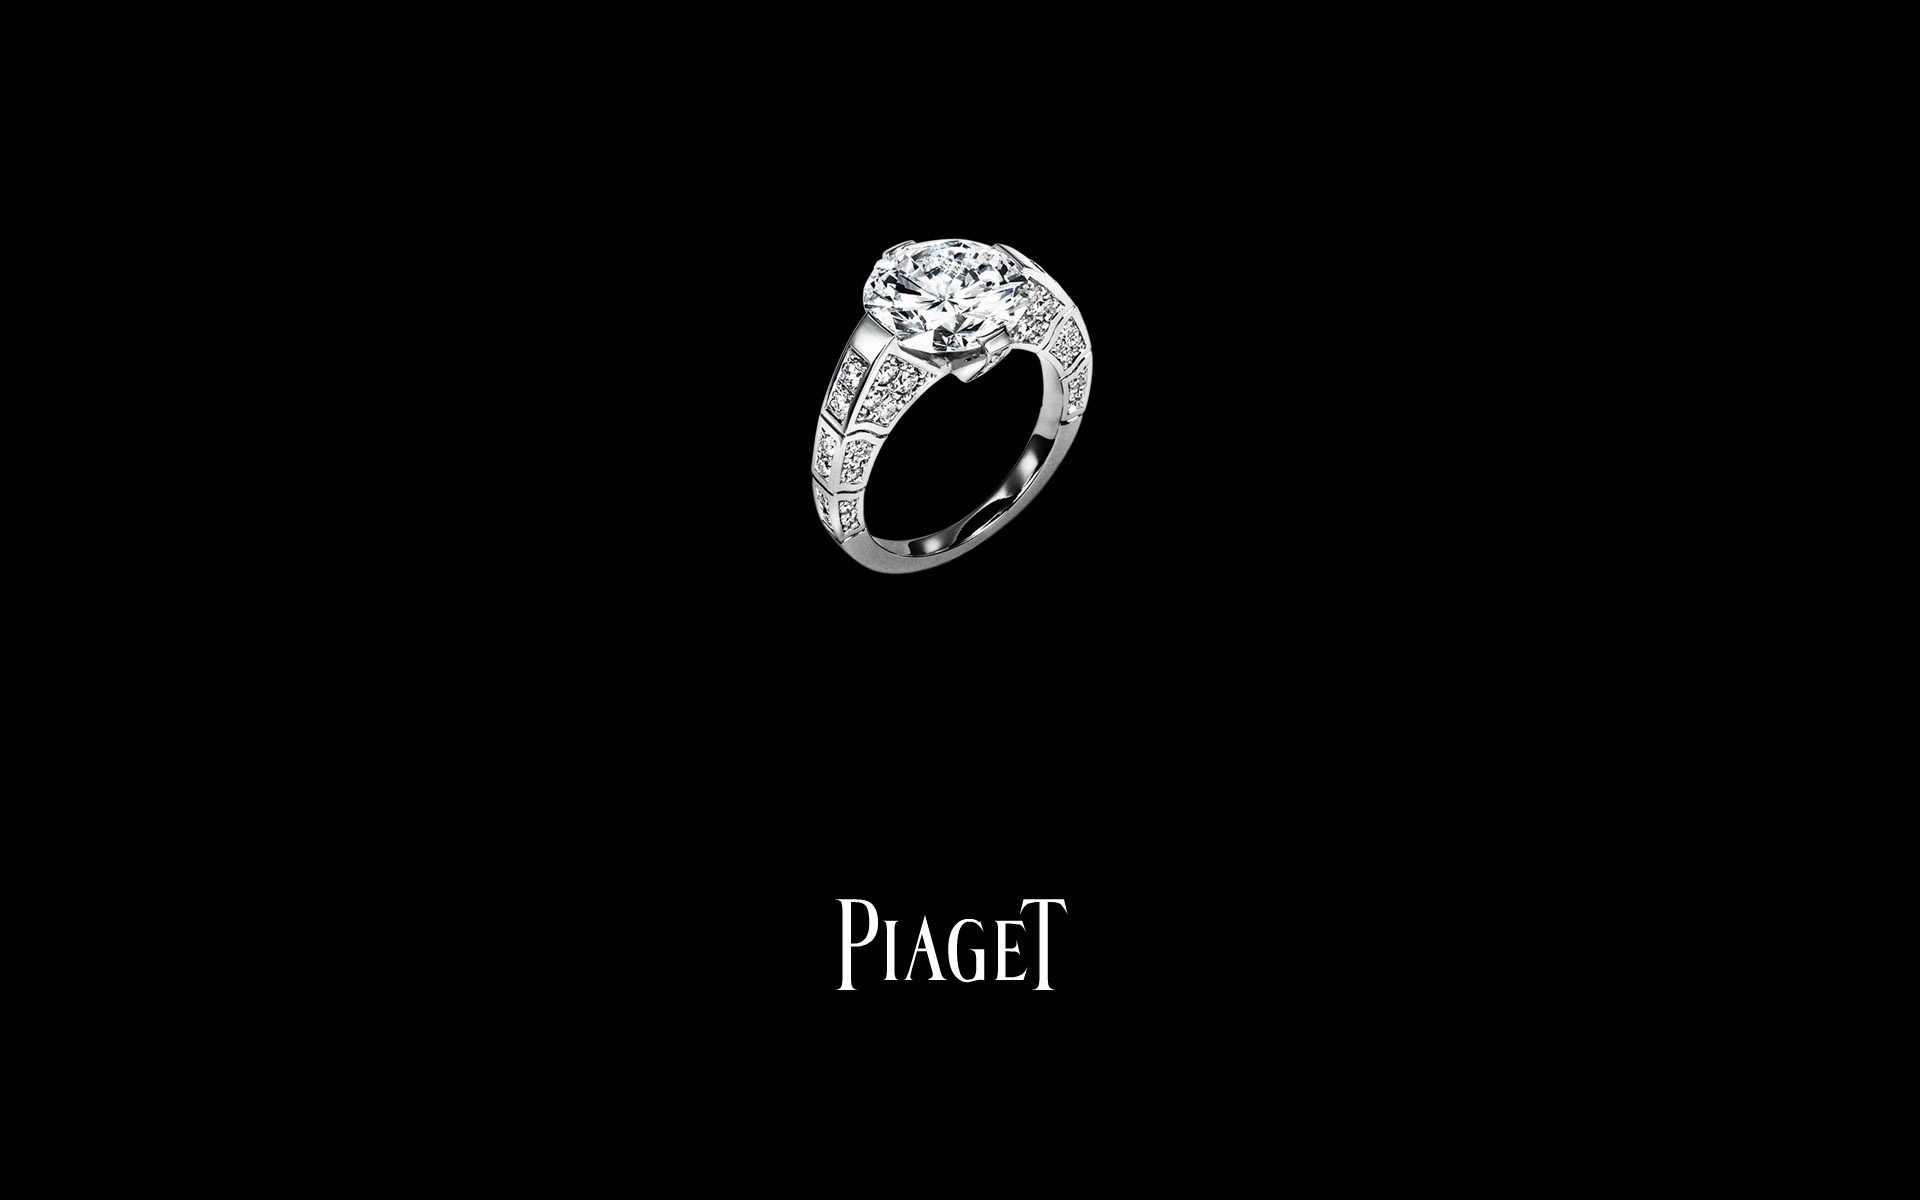 Piaget diamond jewelry wallpaper (4) #14 - 1920x1200